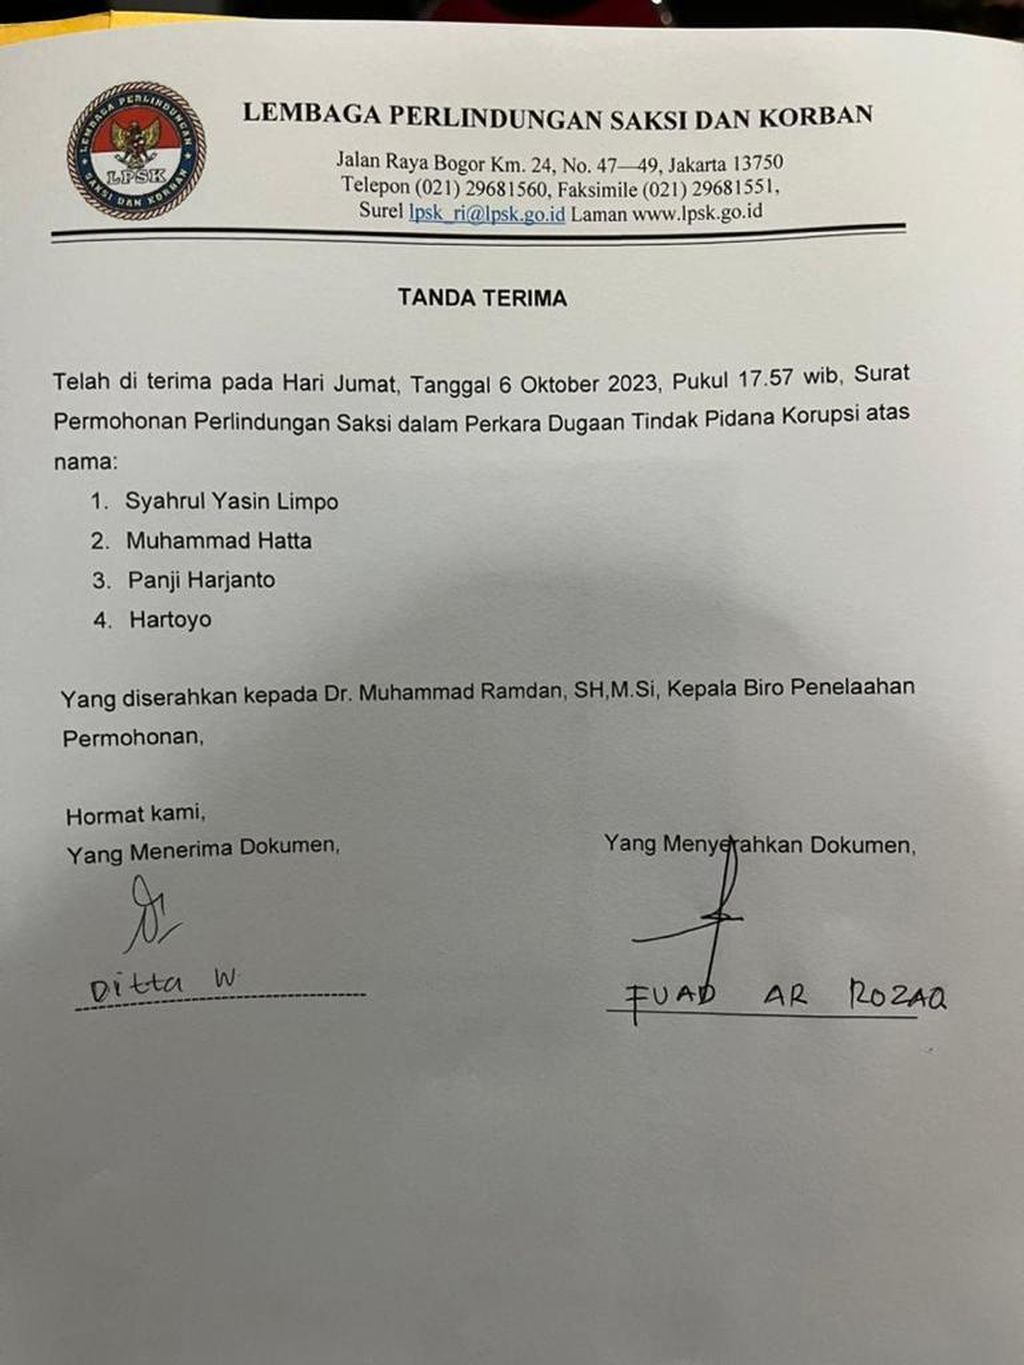 Foto dari tanda terima atas surat permohonan perlindungan saksi yang diajukan beberapa orang, termasuk Syahrul Yasin Limpo, kepada Lembaga Perlindungan Saksi dan Korban (LPSK).